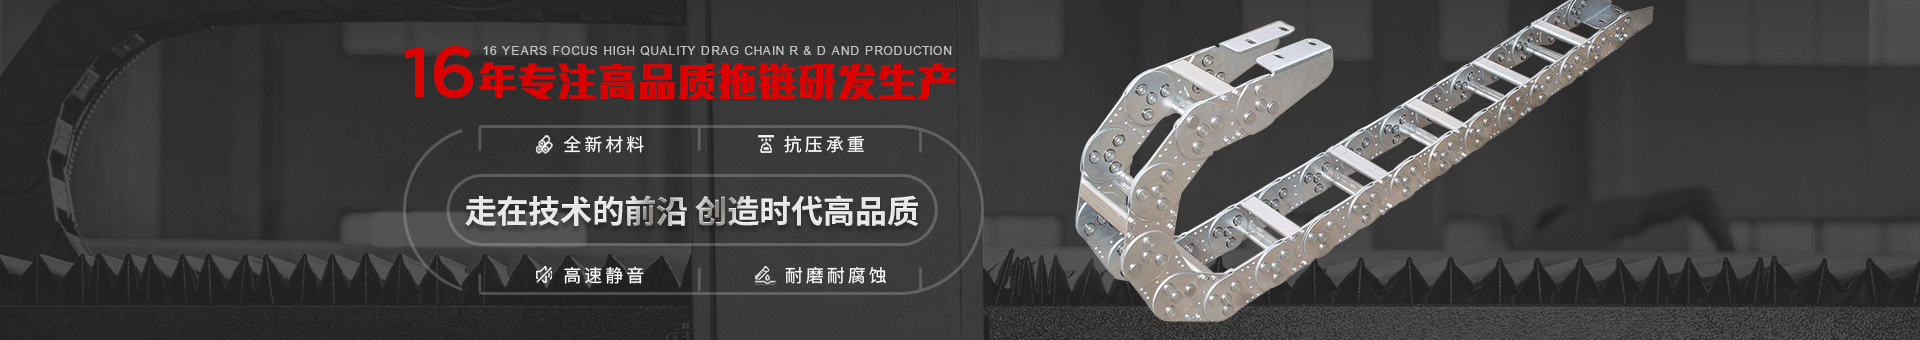 开云手机(中国)官方网站数控banner